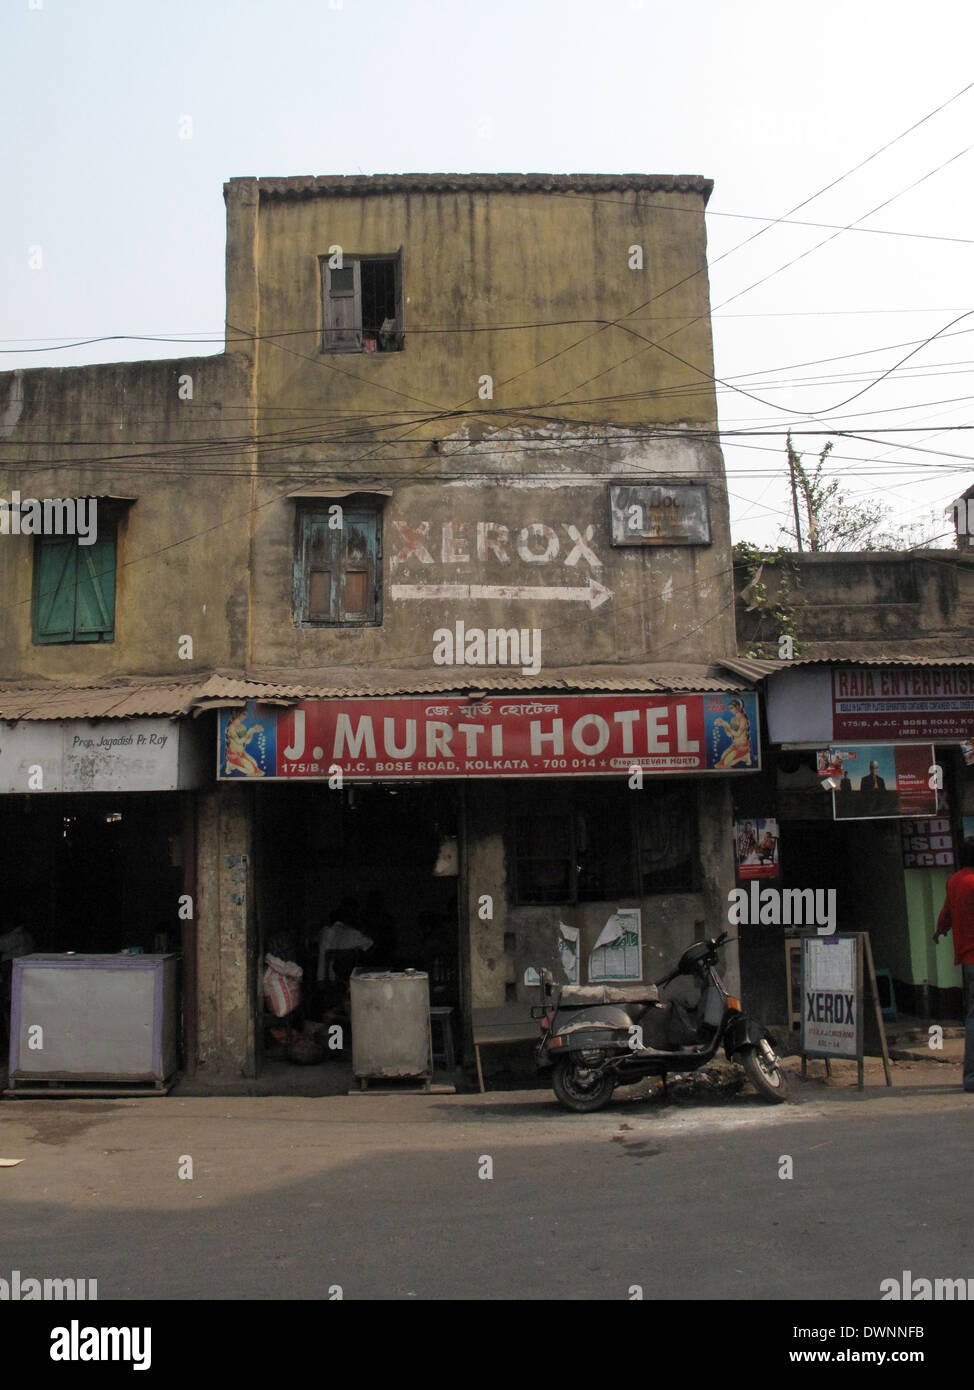 Streets of Kolkata. J. Murti Hotel, January 23, 2009. Stock Photo